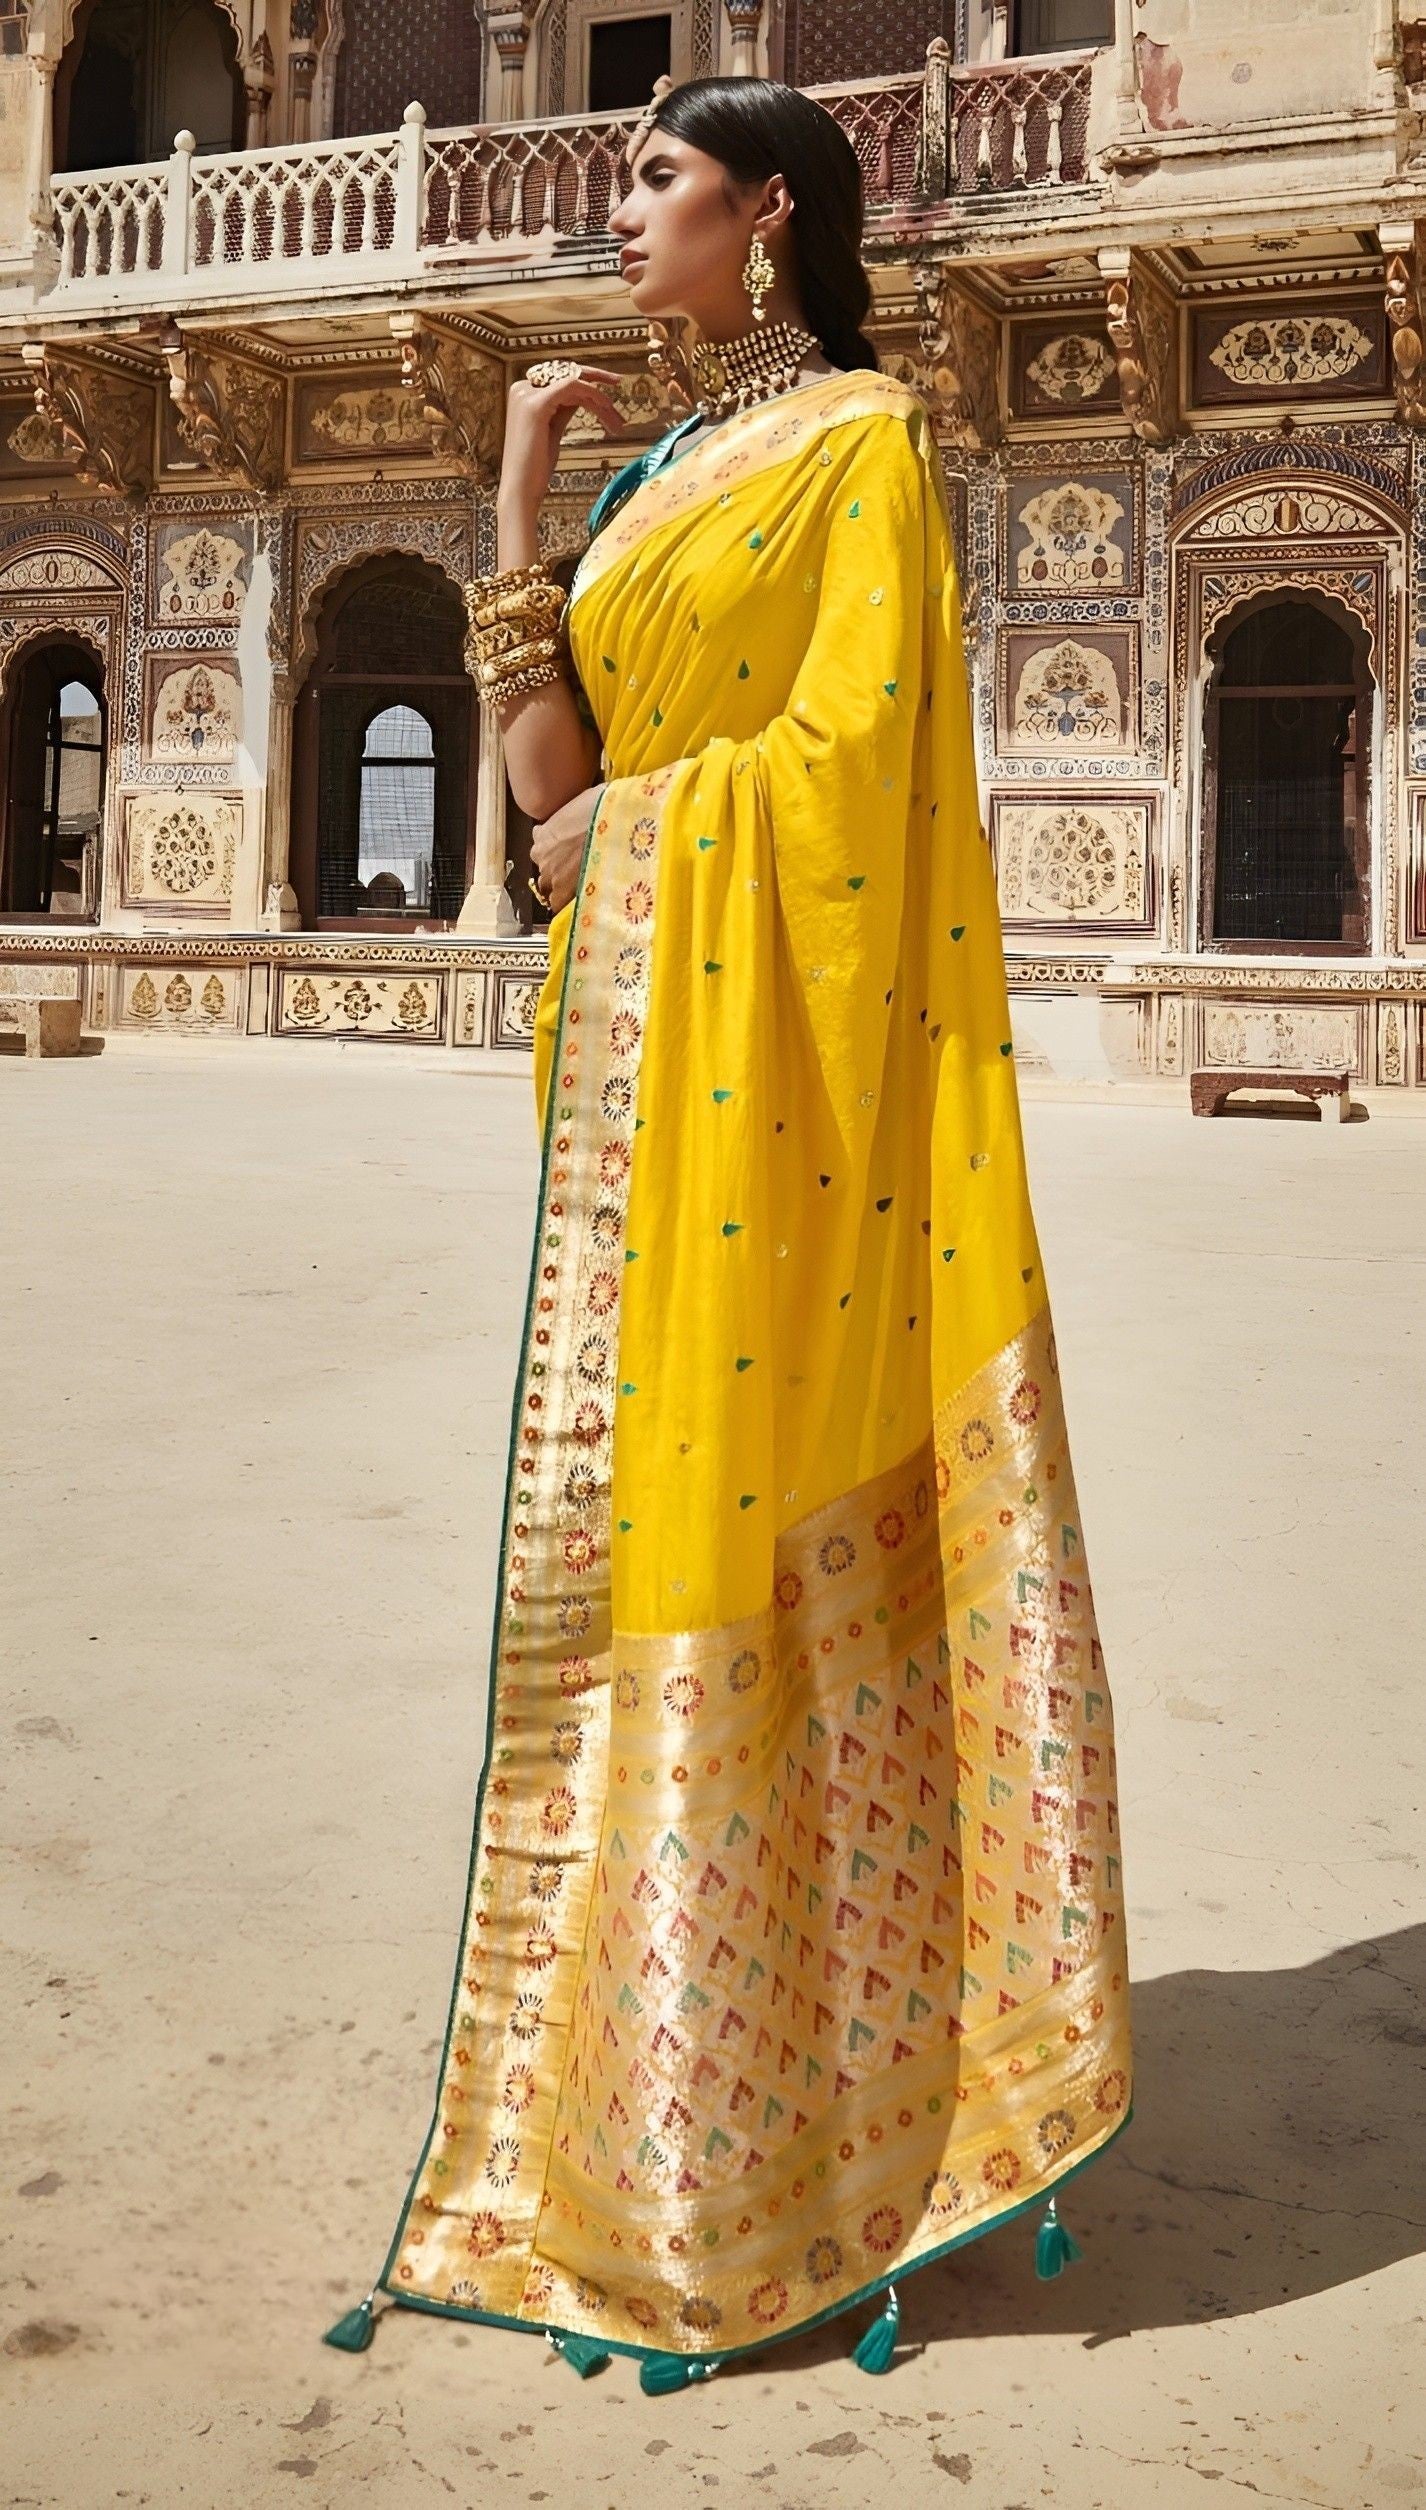 EKKTARA Saree For Women Yellow Colour Designer Paithani Saree With Unstitched Designer Blouse